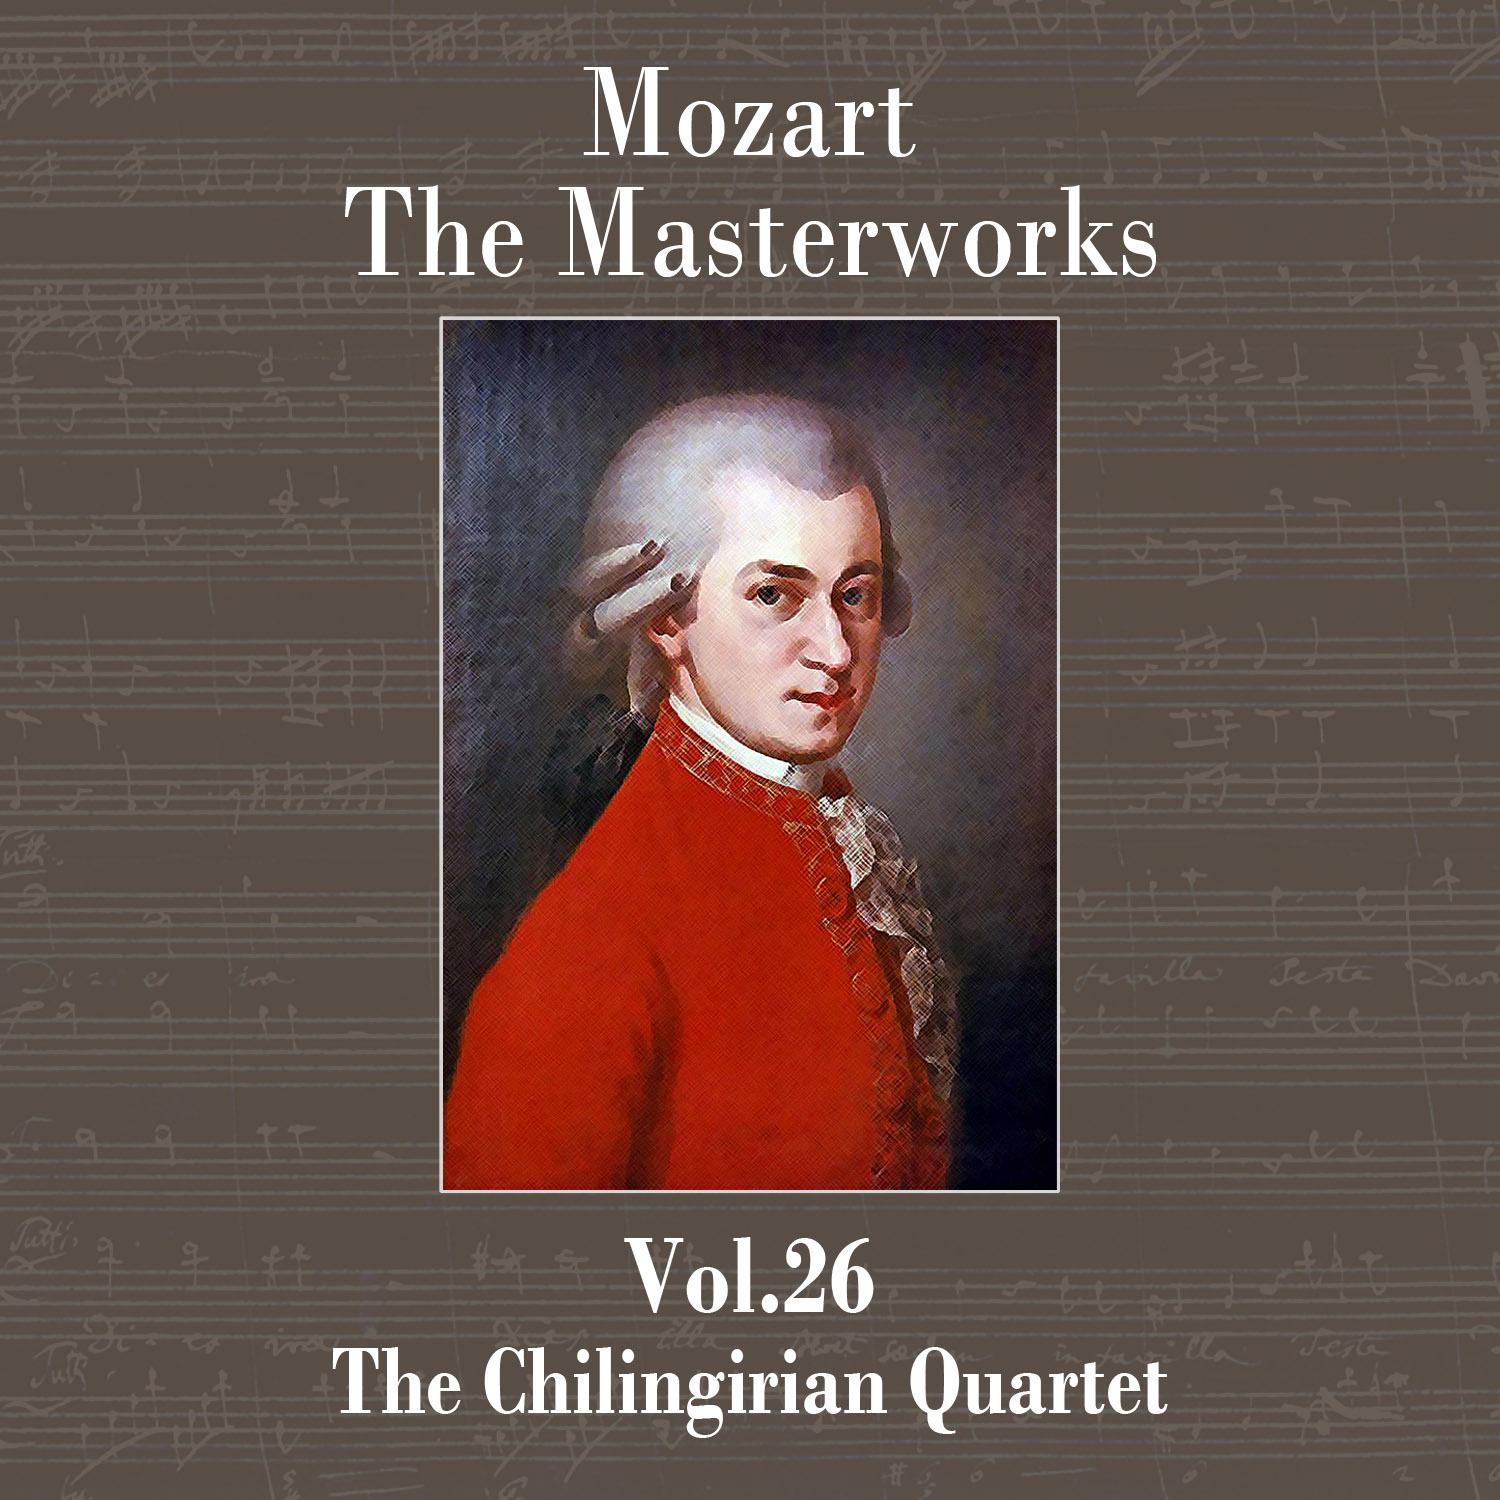 Mozart: The Masterworks Vol. 26